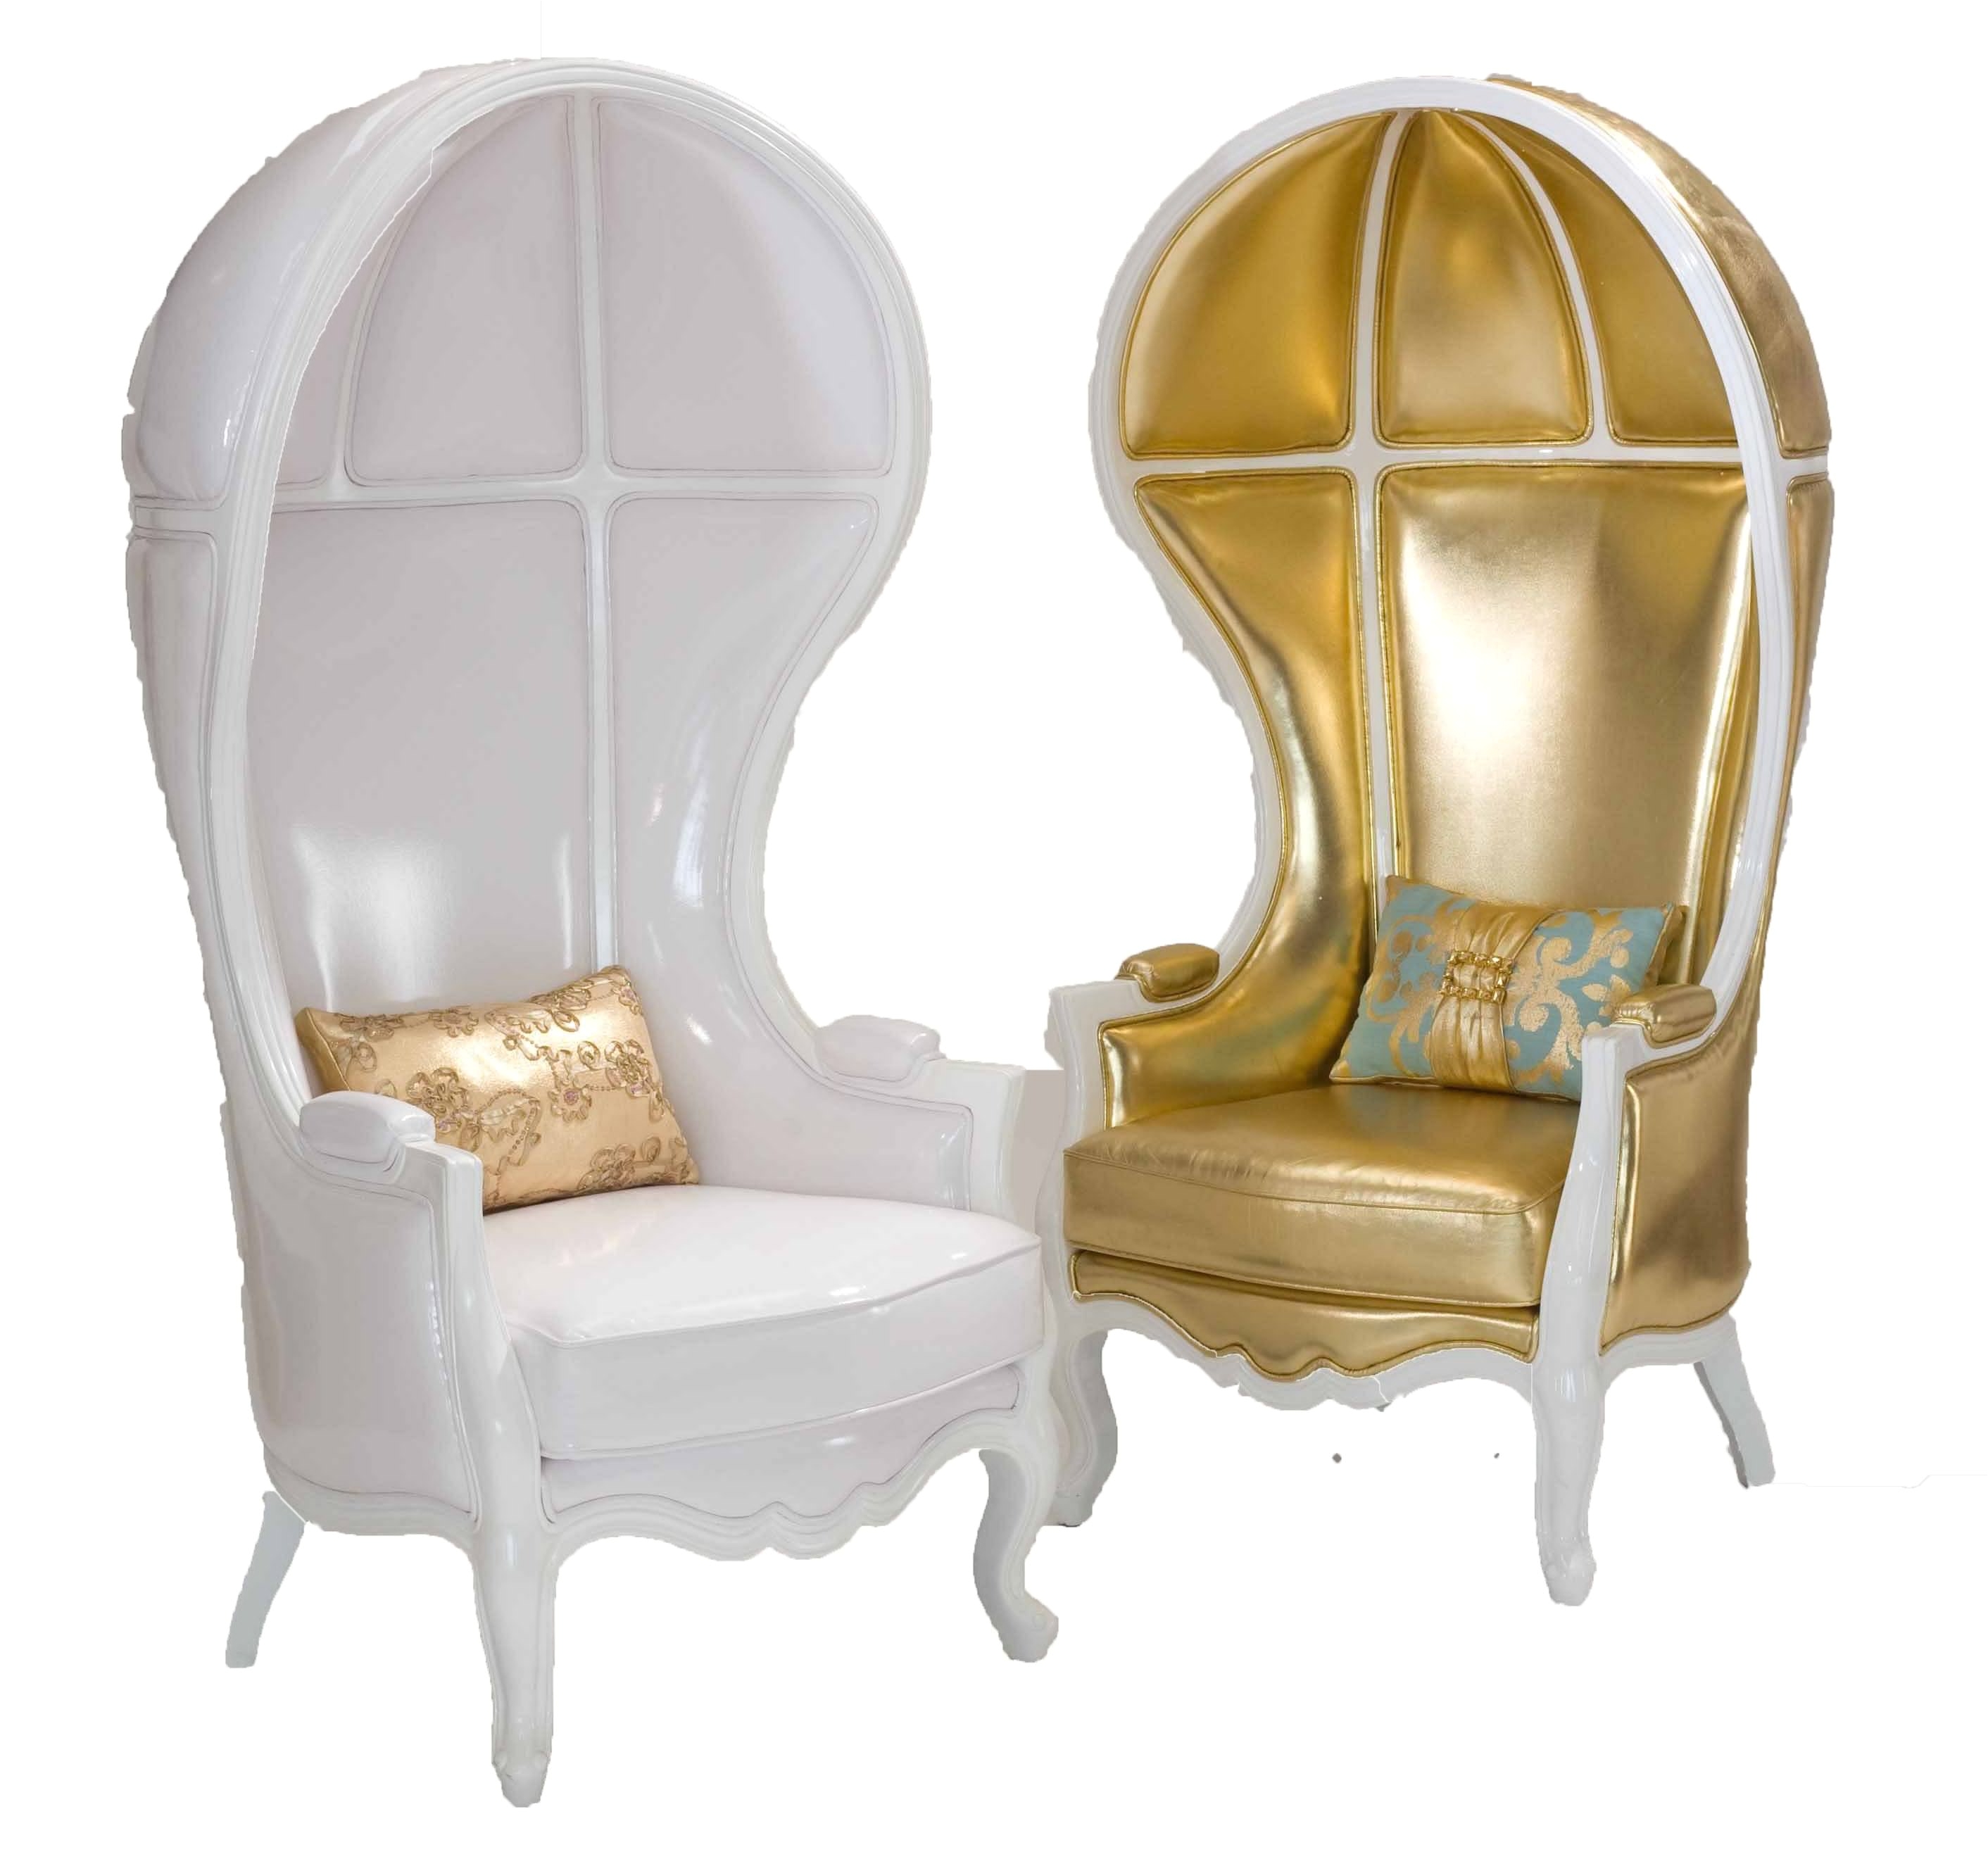 Baby Shower Throne Chair Rental Brooklyn Ny Indoor Chairs White Throne Chairs Baby Shower Chair Rental Nyc